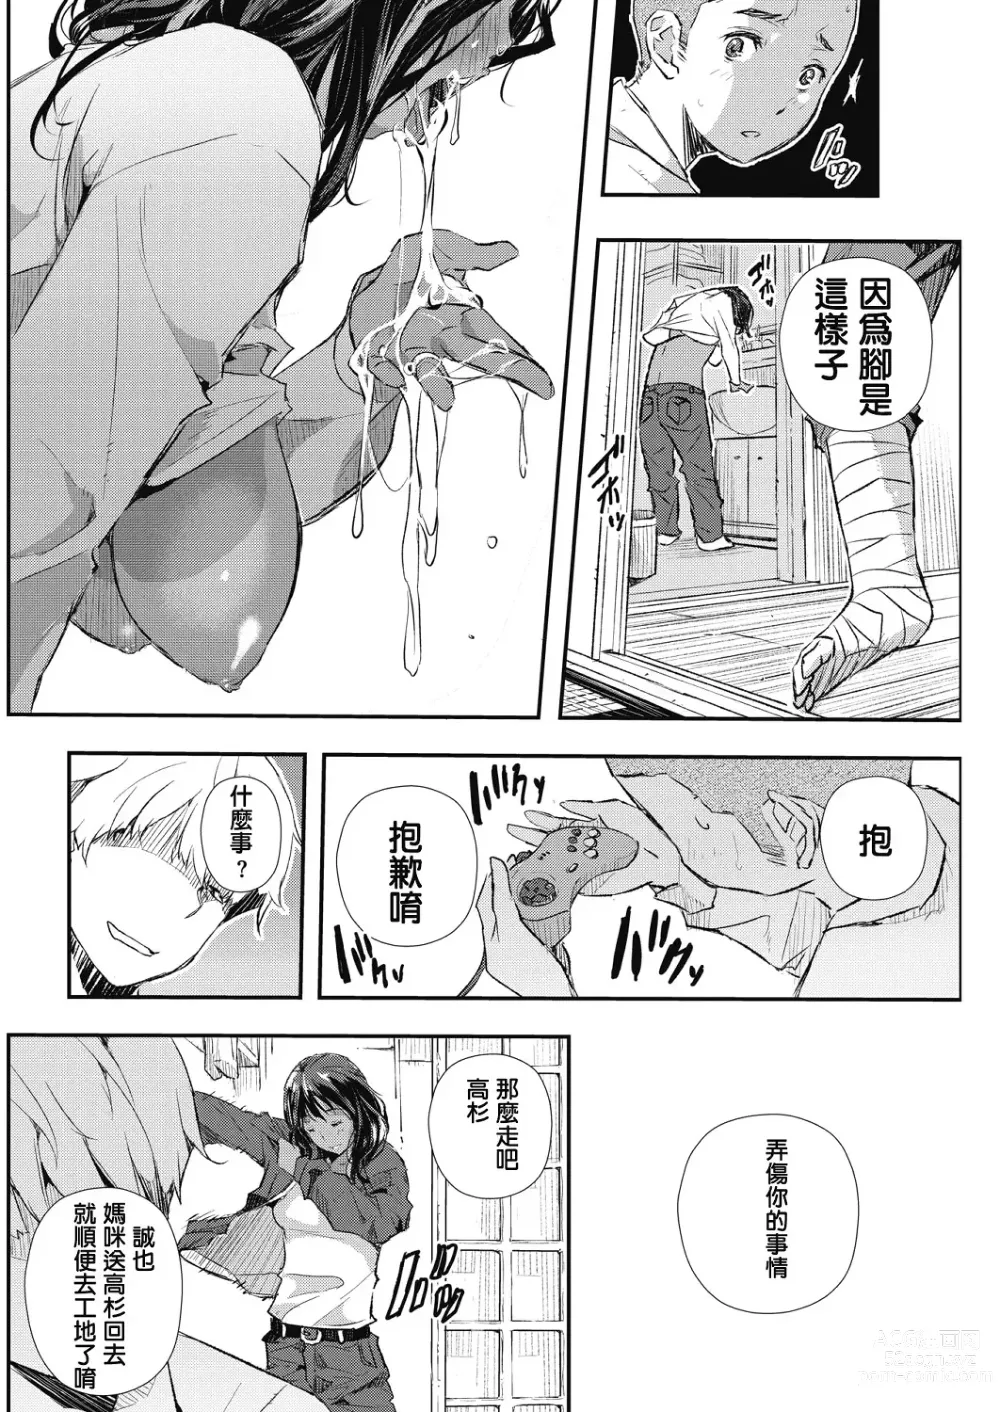 Page 6 of manga Hairan Yu-gi